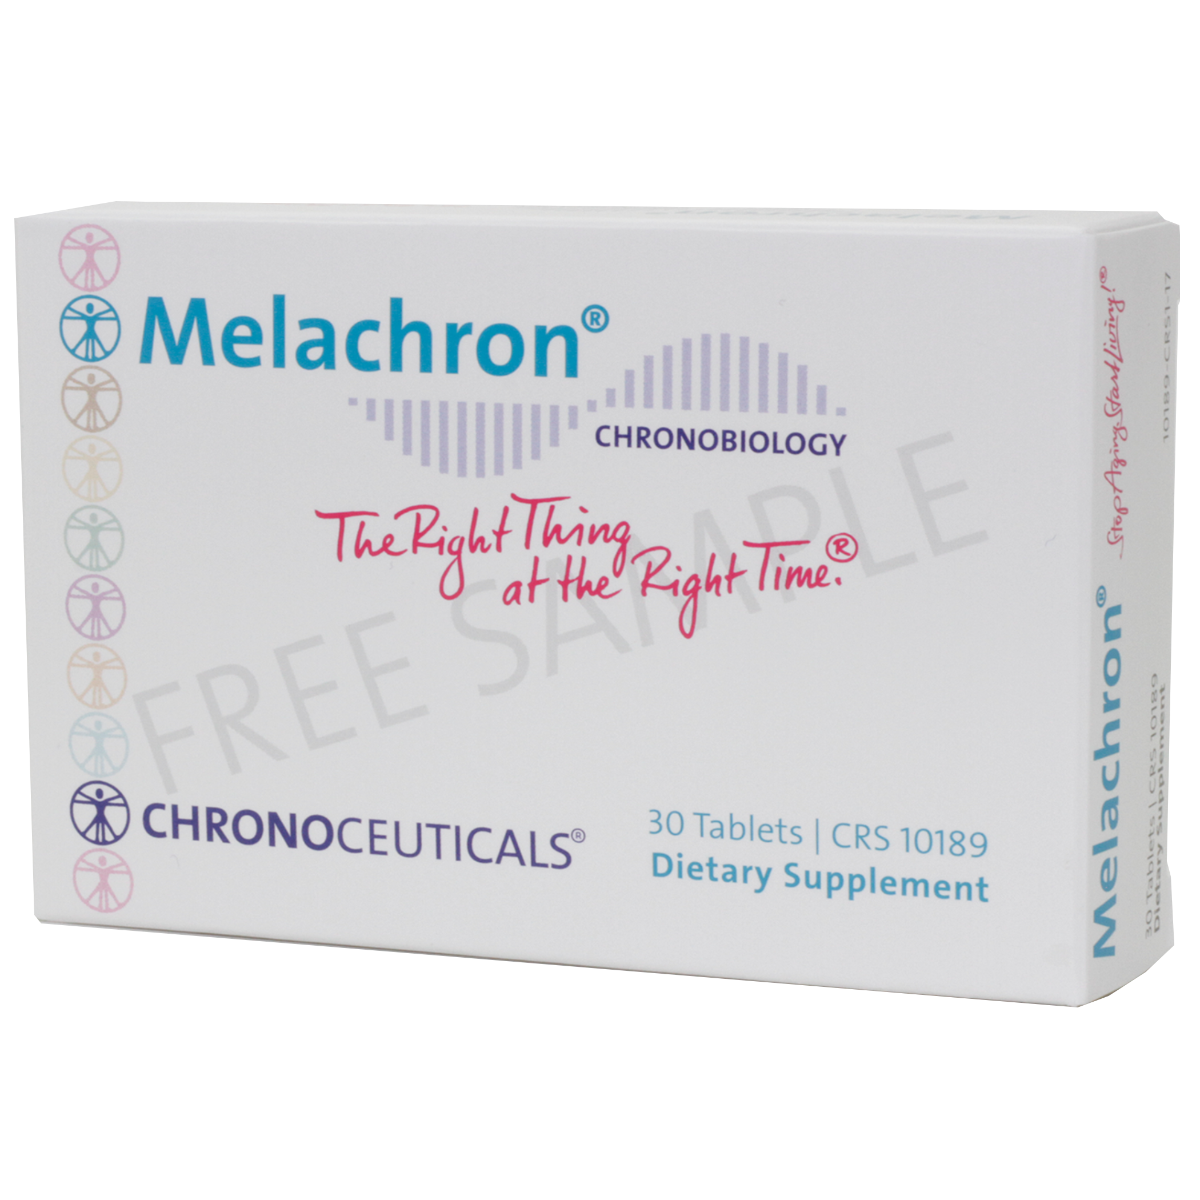 Melachron® Free Sample